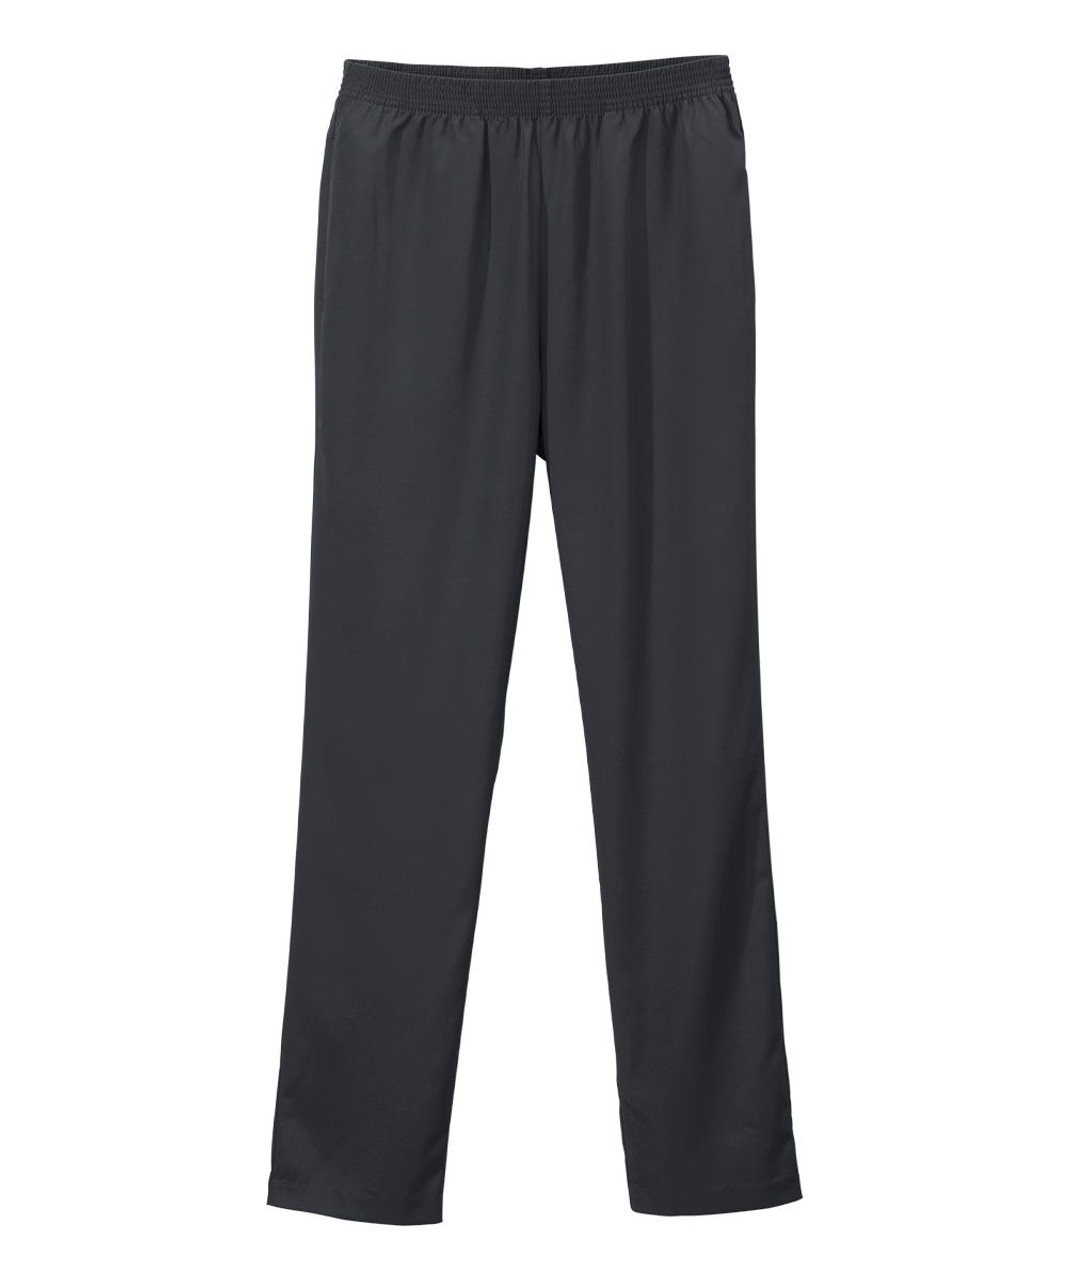 Silverts SV13100 Women's Pull On Pants - Senior Women's Pull-on Petite Gabardine Pant Black, Size=10P, SV13100-BLK-10P